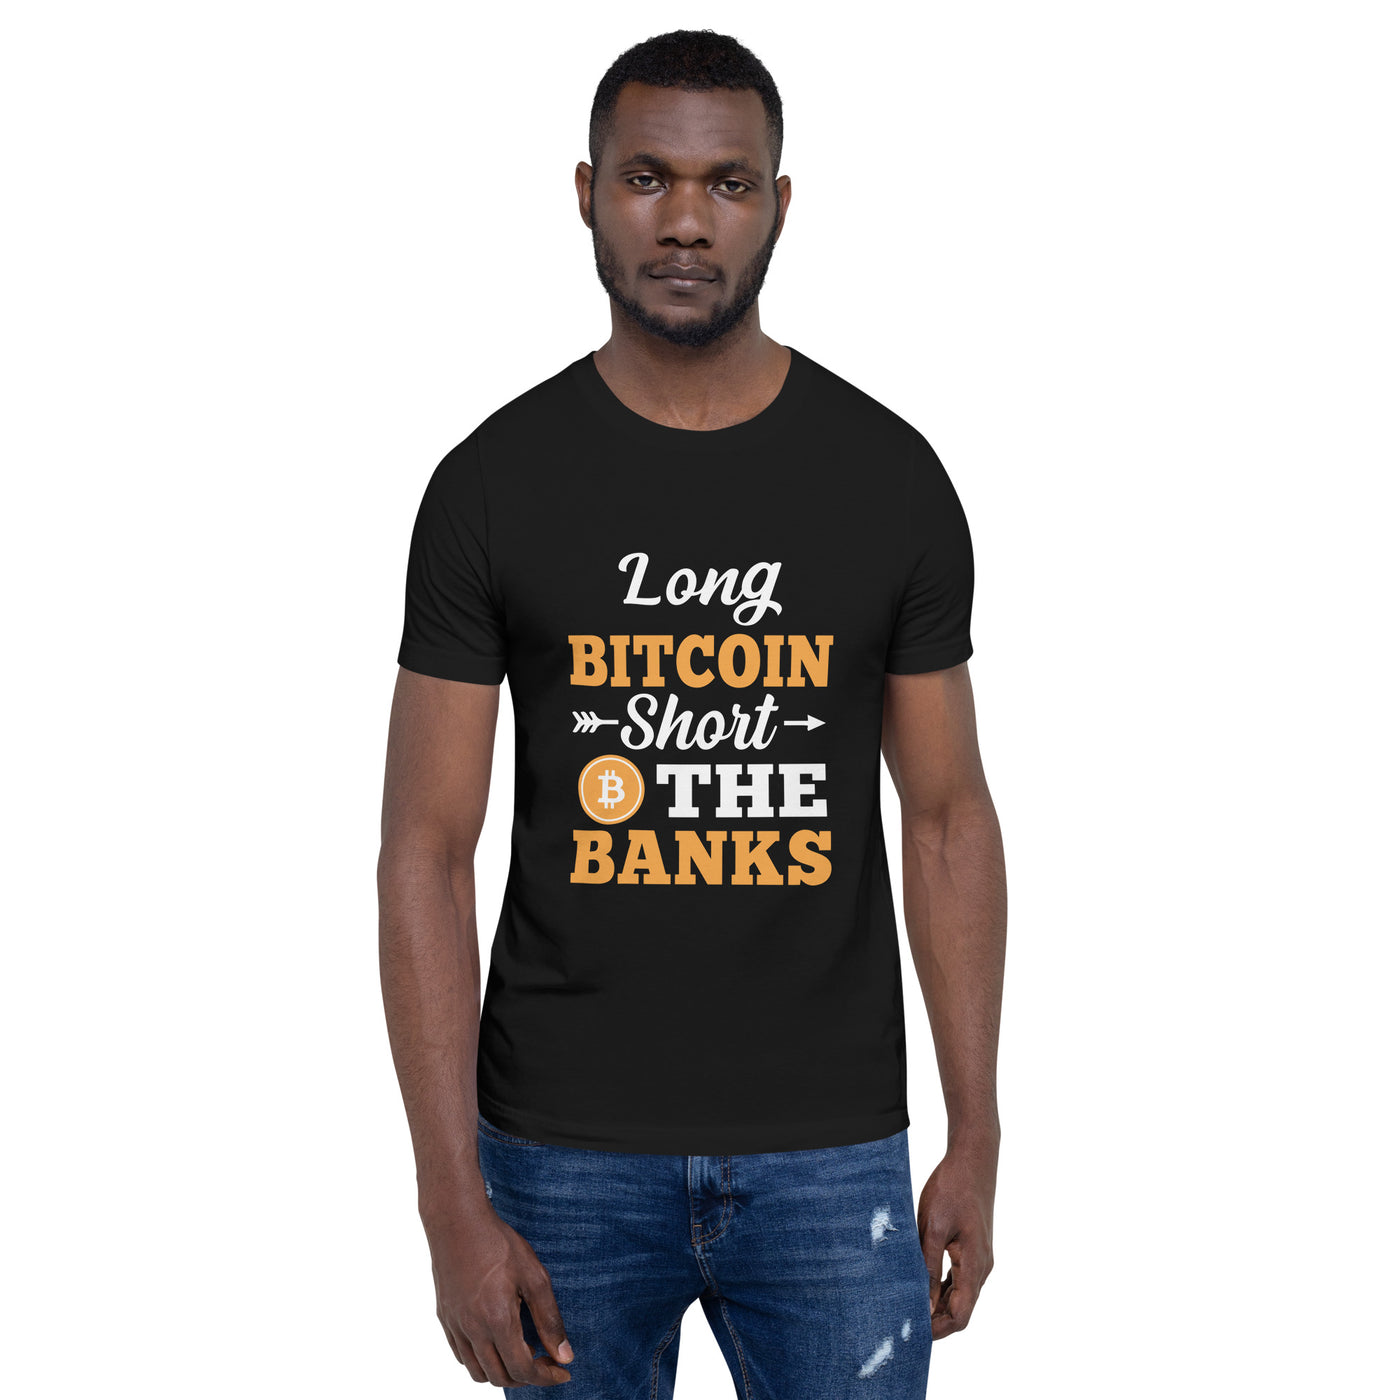 Long Big Coin, Short the Banks - Unisex t-shirt